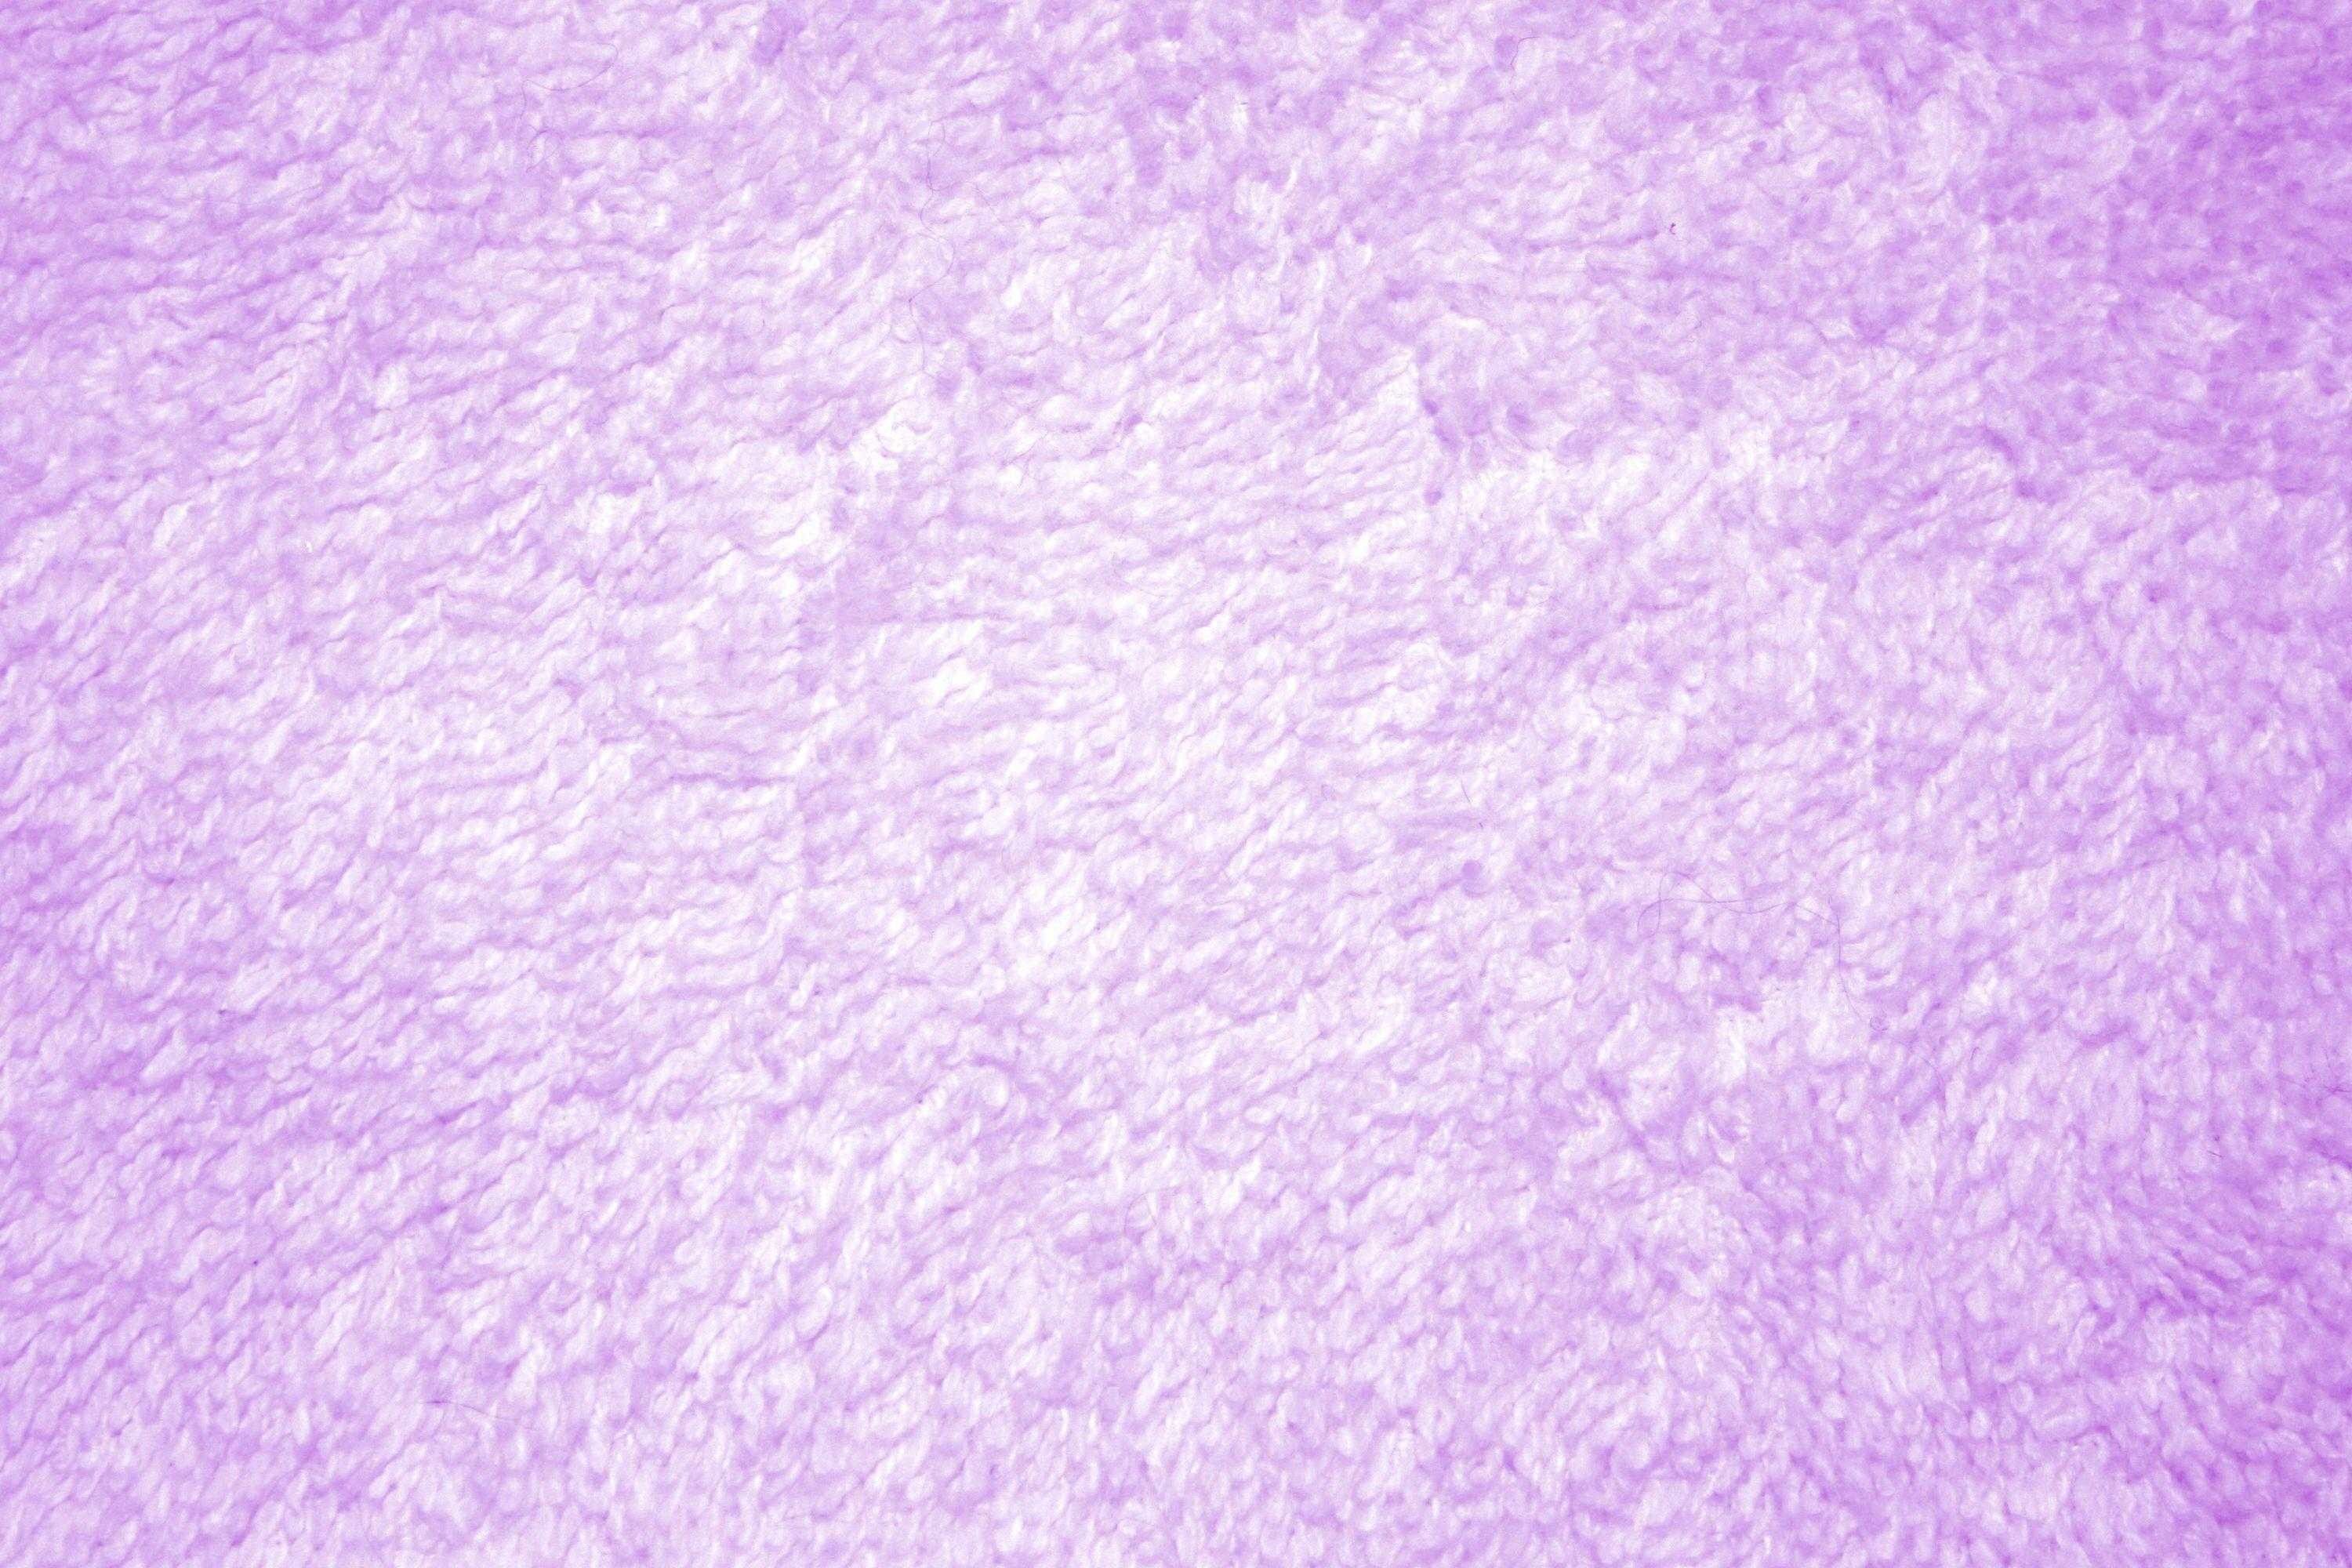 A purple towel texture background - Light purple